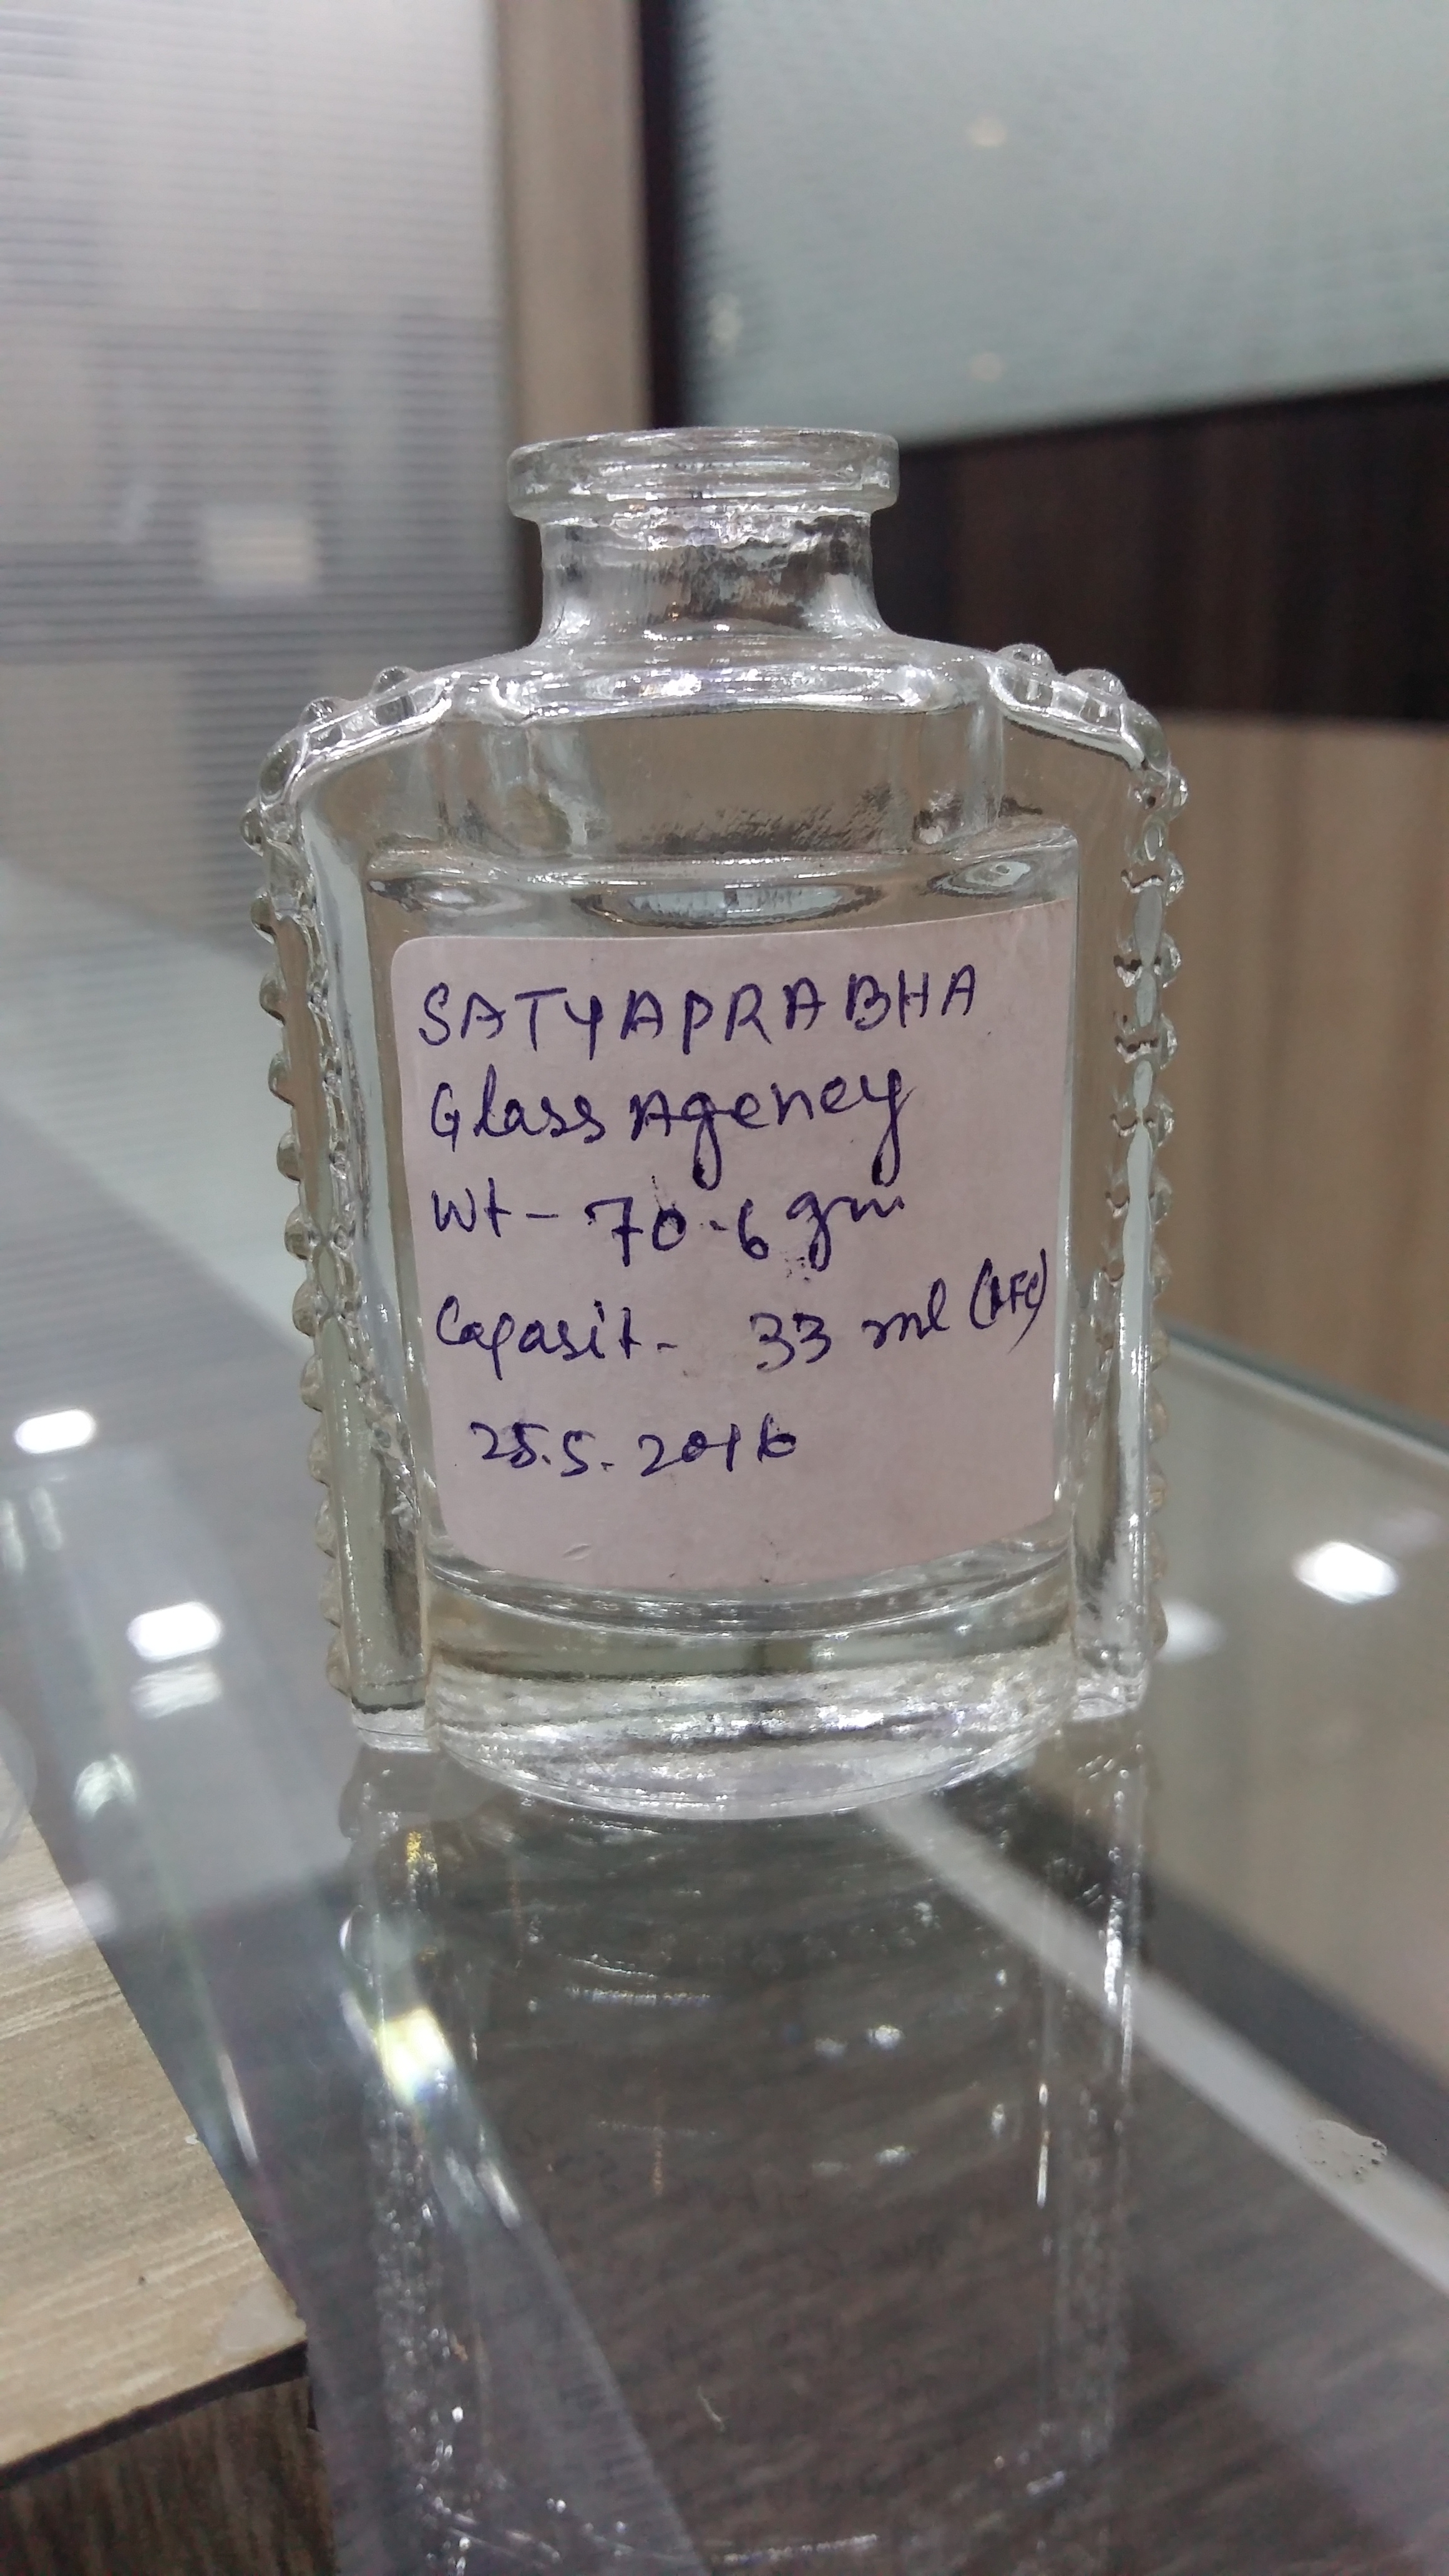 30 ml Perfume Bottle